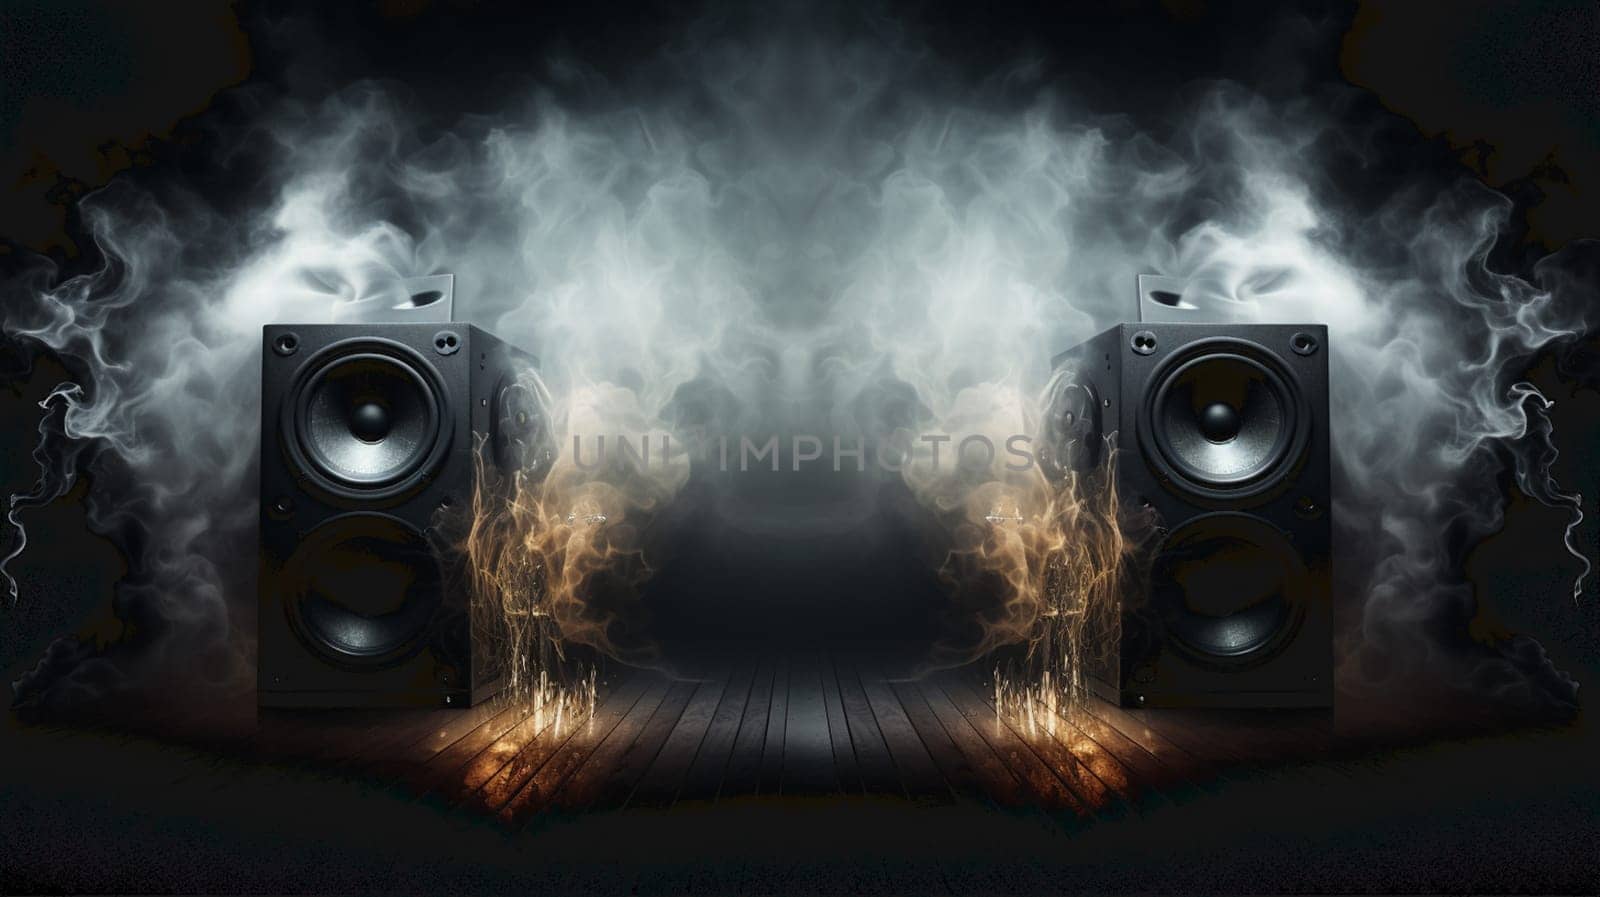 Burning speaker music style background by Andelov13